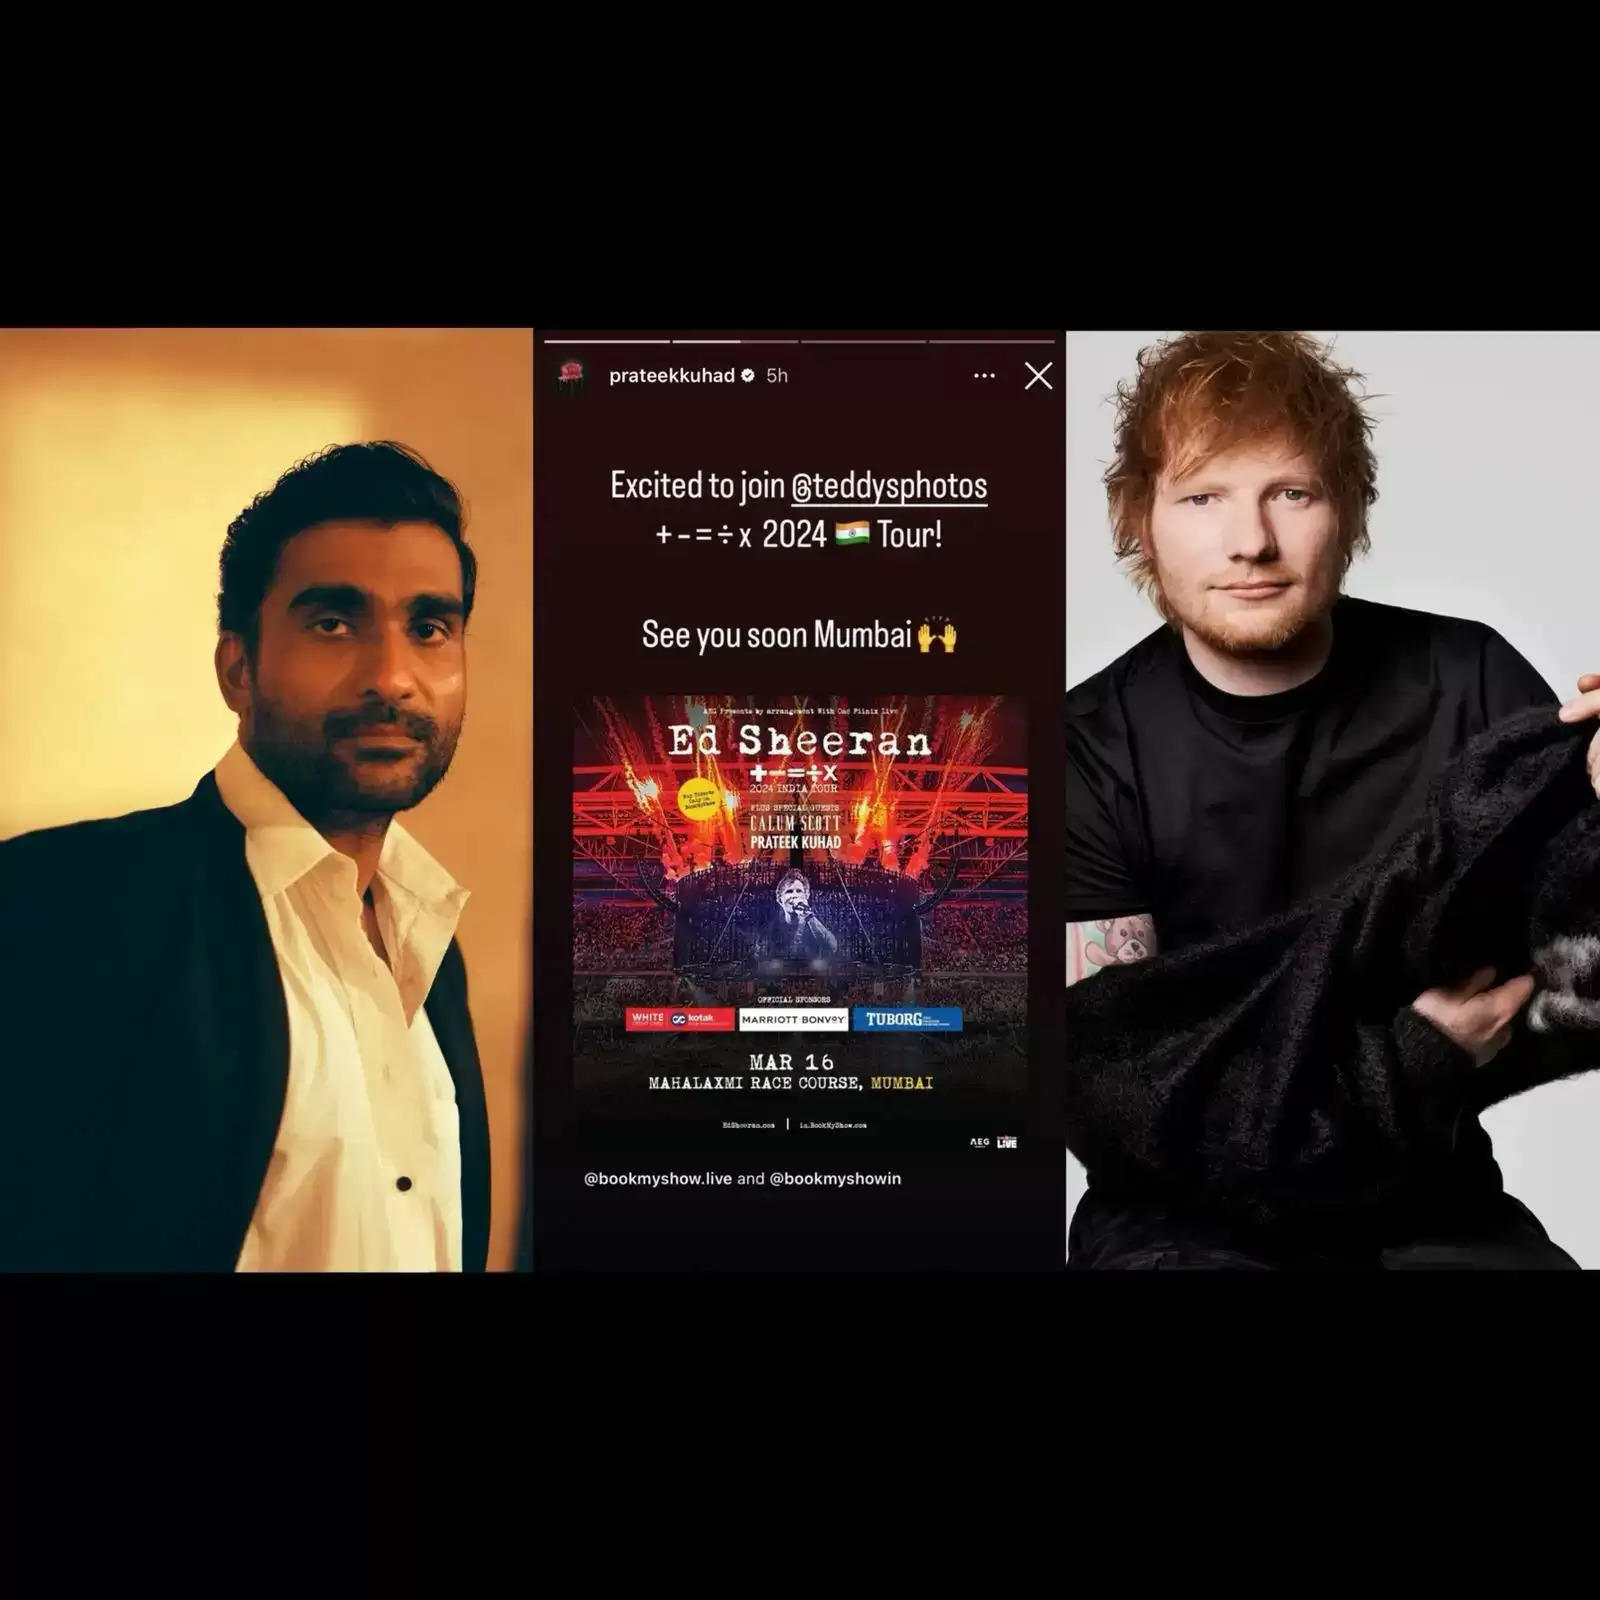 Ed Sheeran and Prateek Kuhad to Cast a Musical Spell on Mumbai!